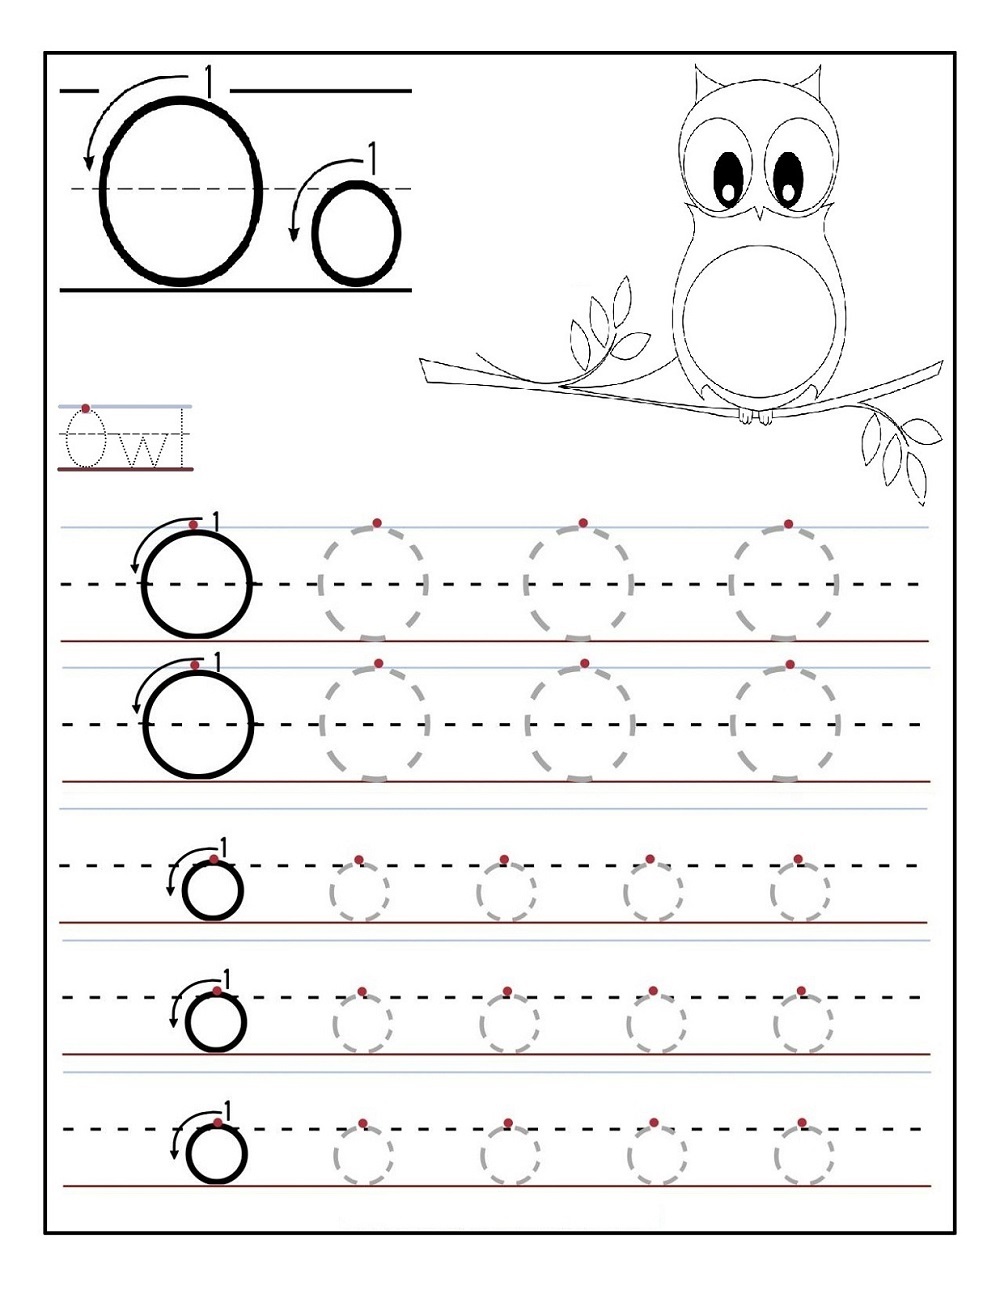 tracing letter o worksheets for kids